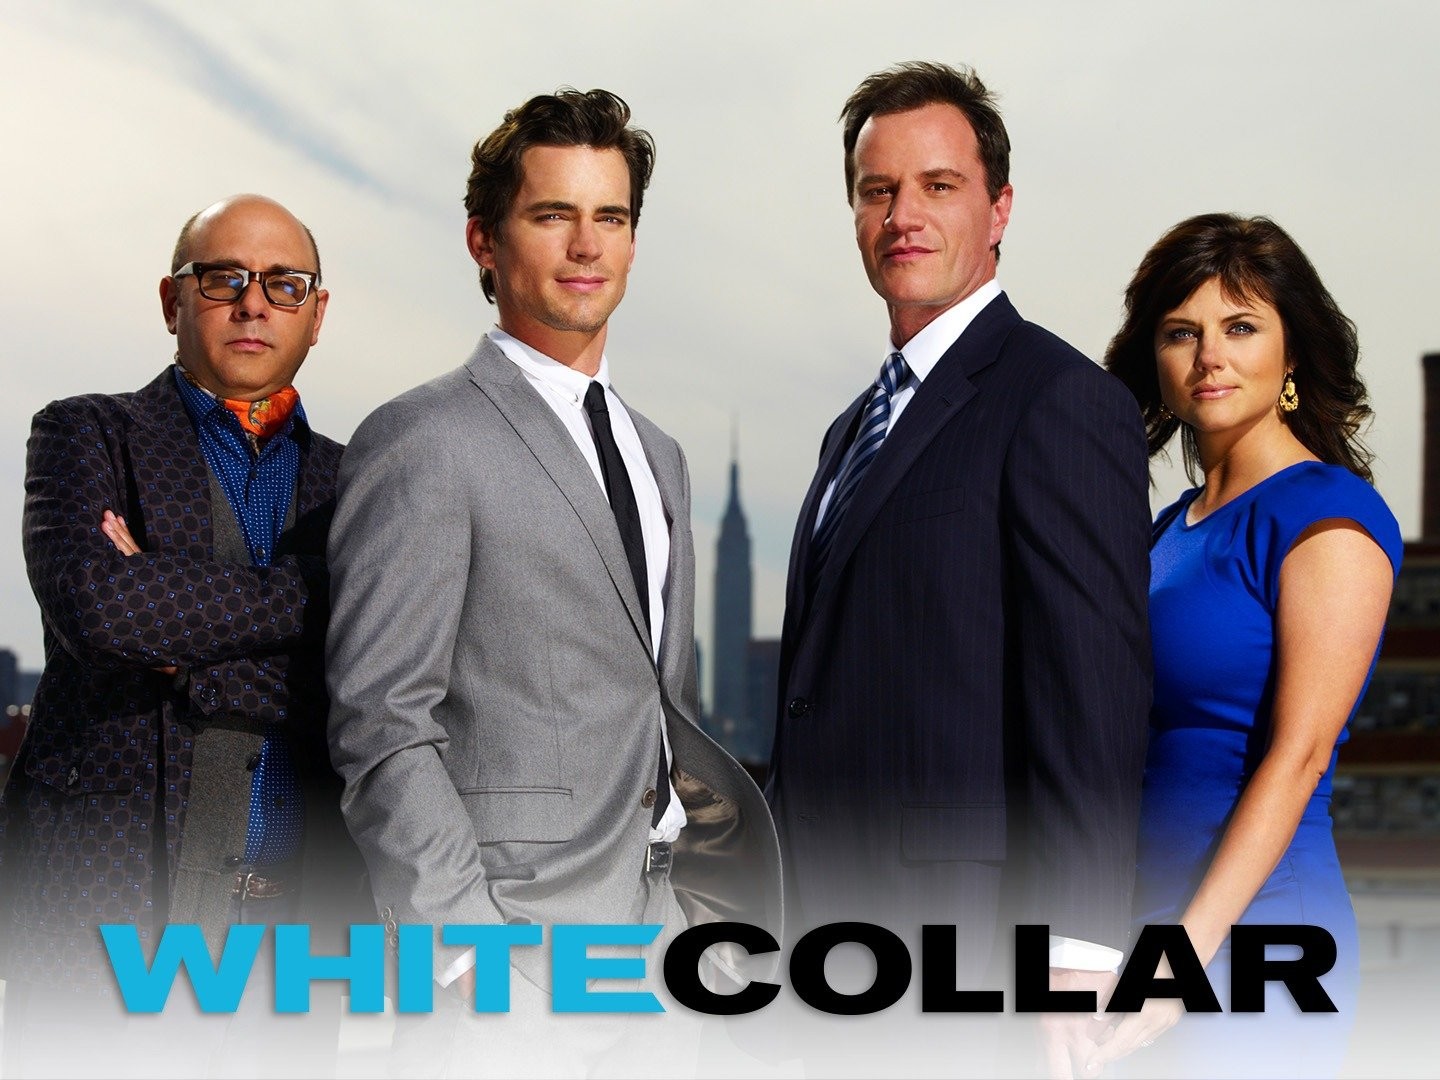 White Collar Season 3: Where to Watch & Stream Online